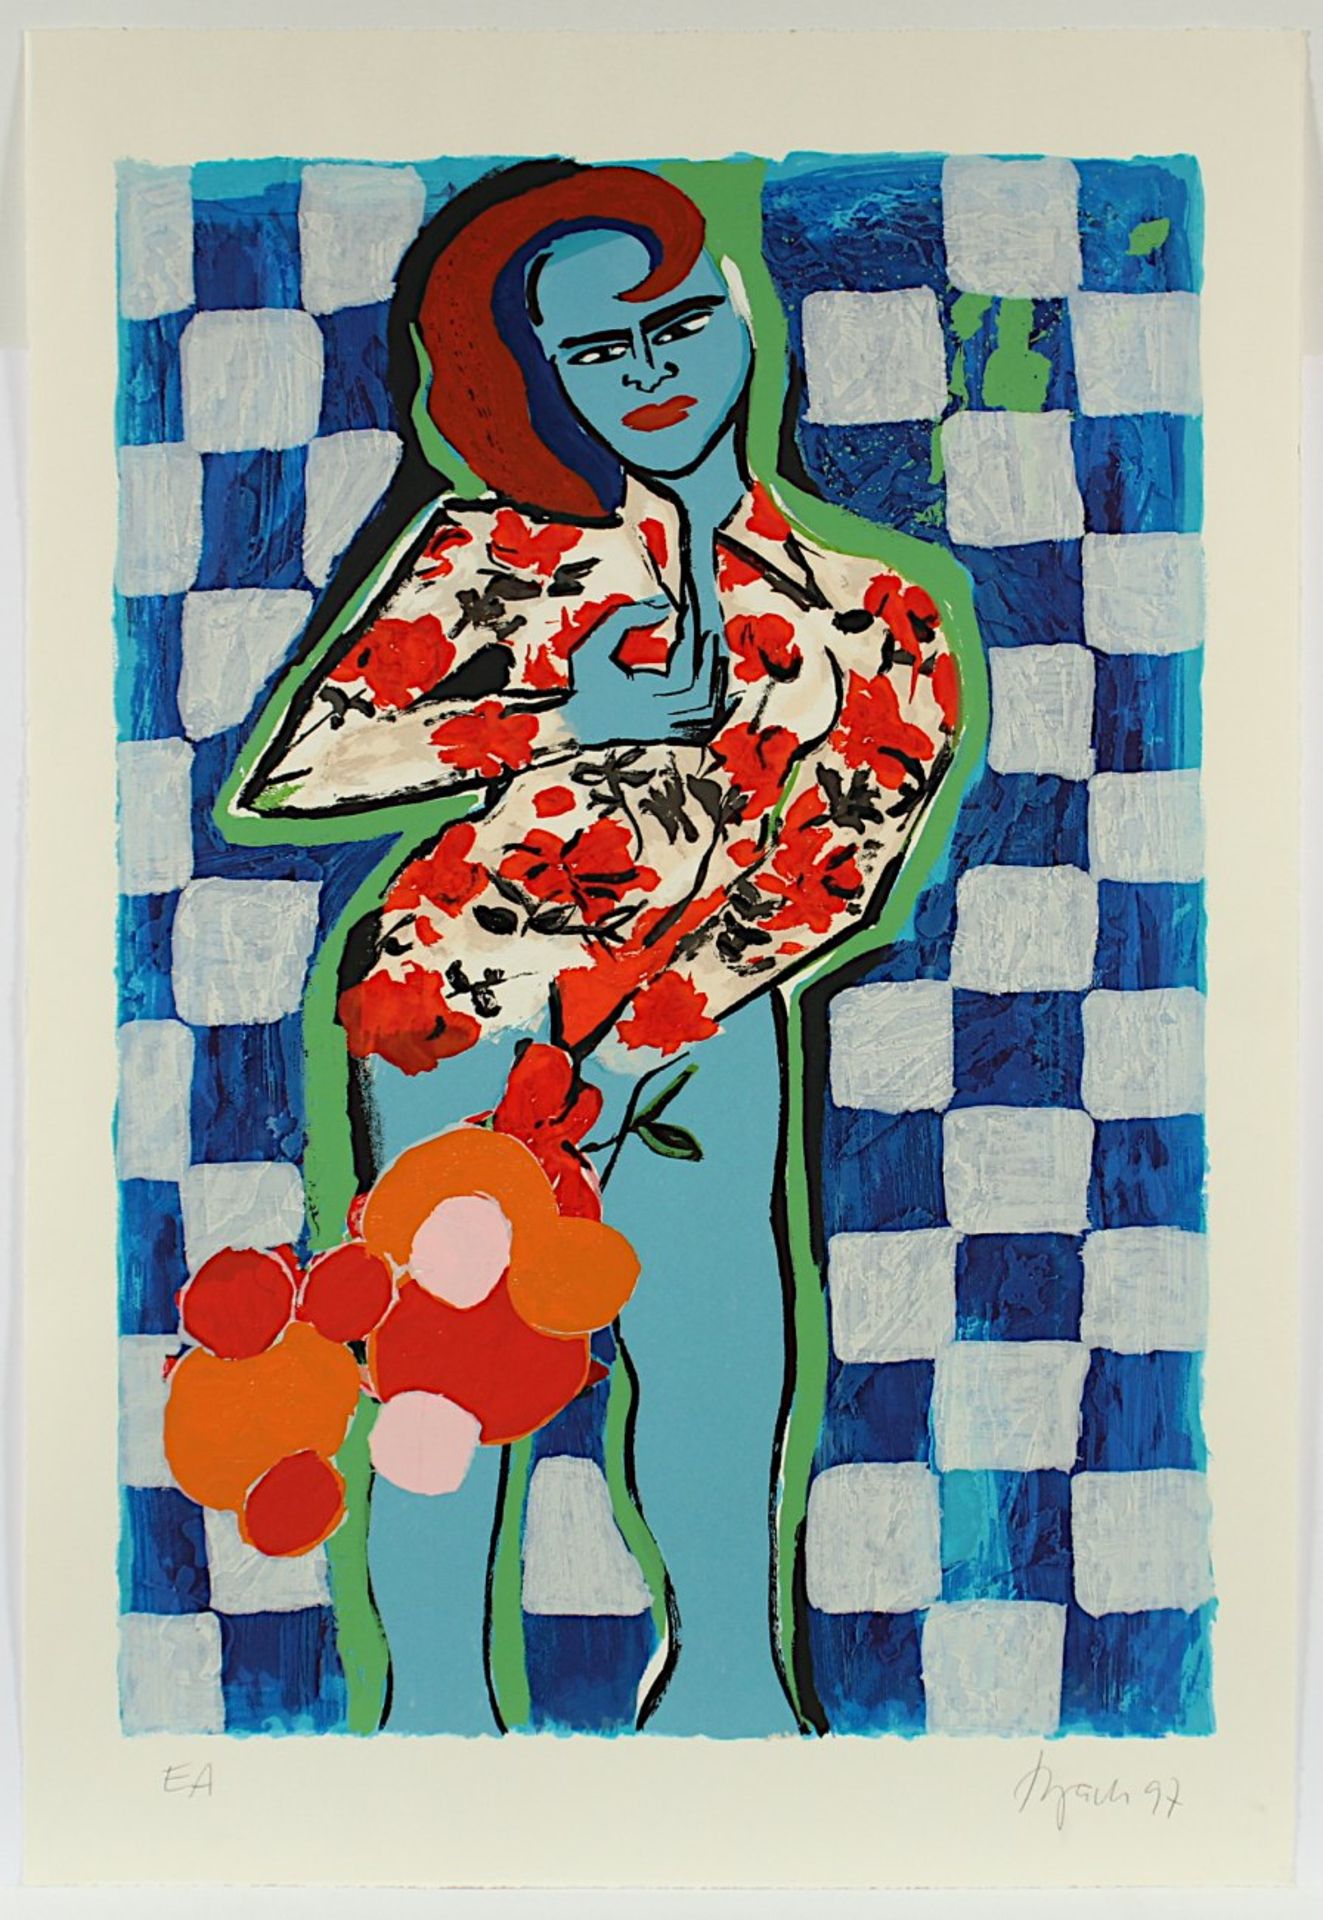 BACH, Elvira, "Flower power", Farbserigrafie, 103 x 77, bez. EA, handsigniert und datiert '97,